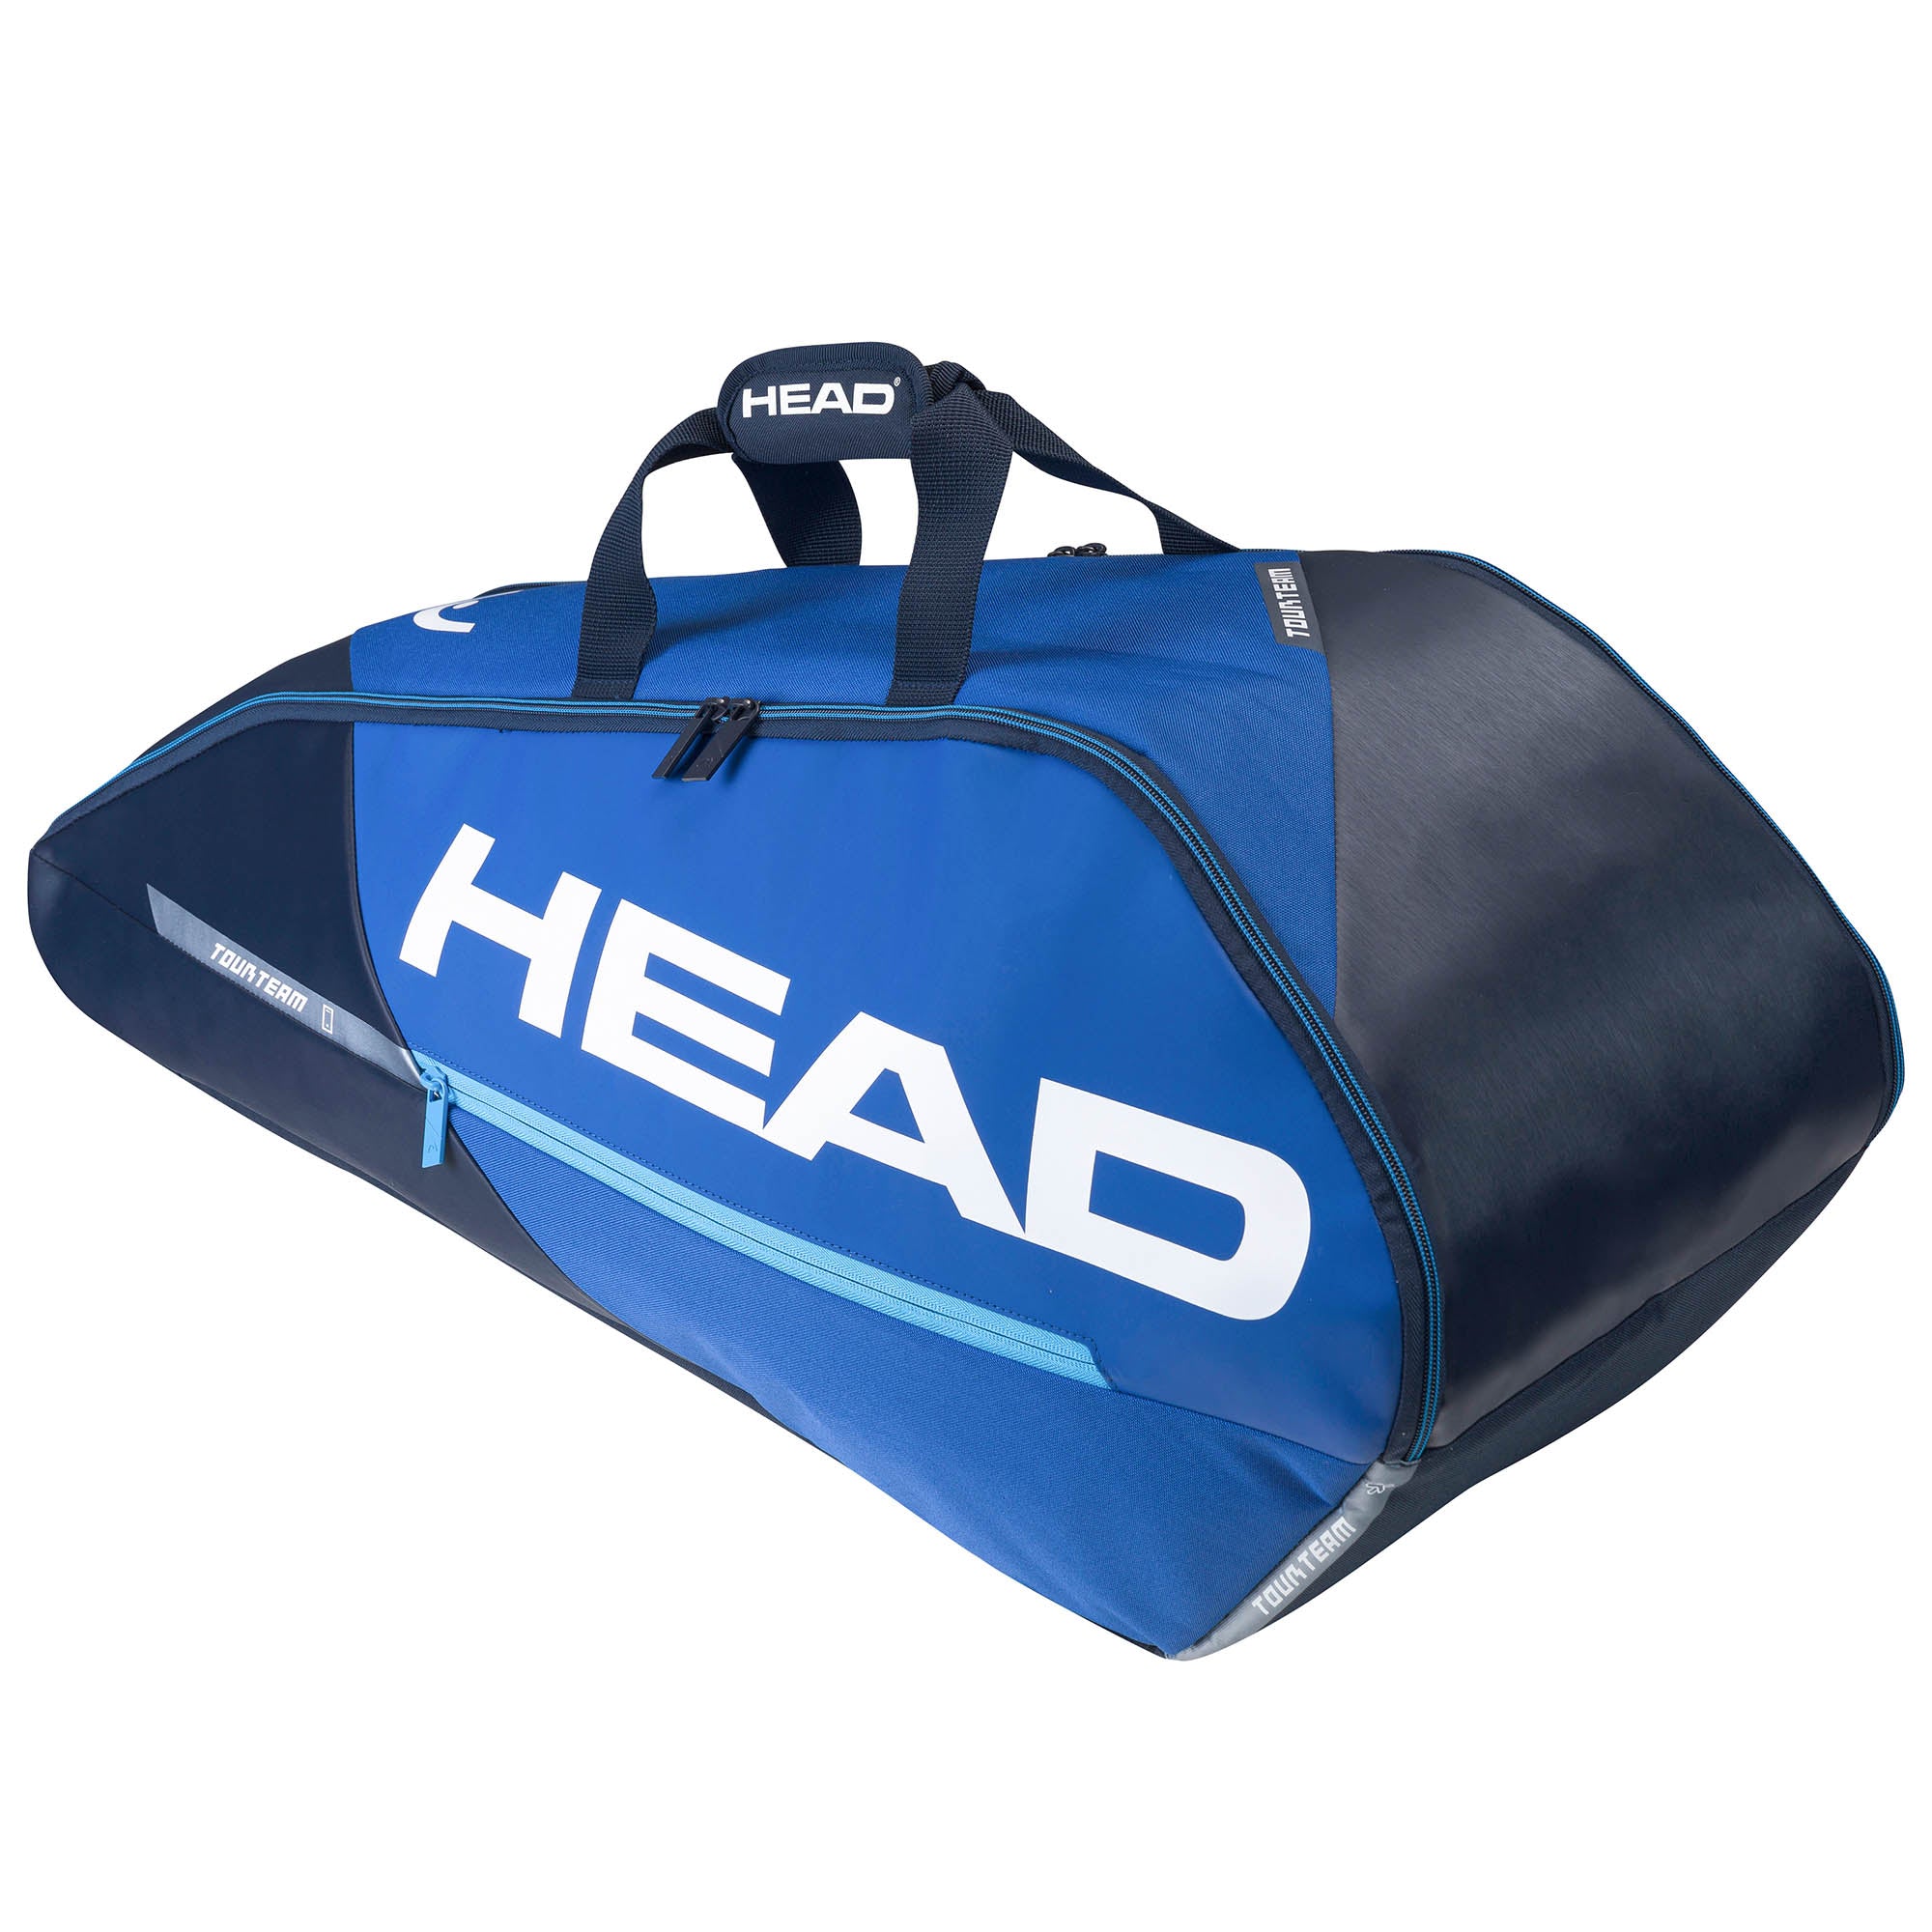 Head Tour Team 6R Combi 6 Racket Bag